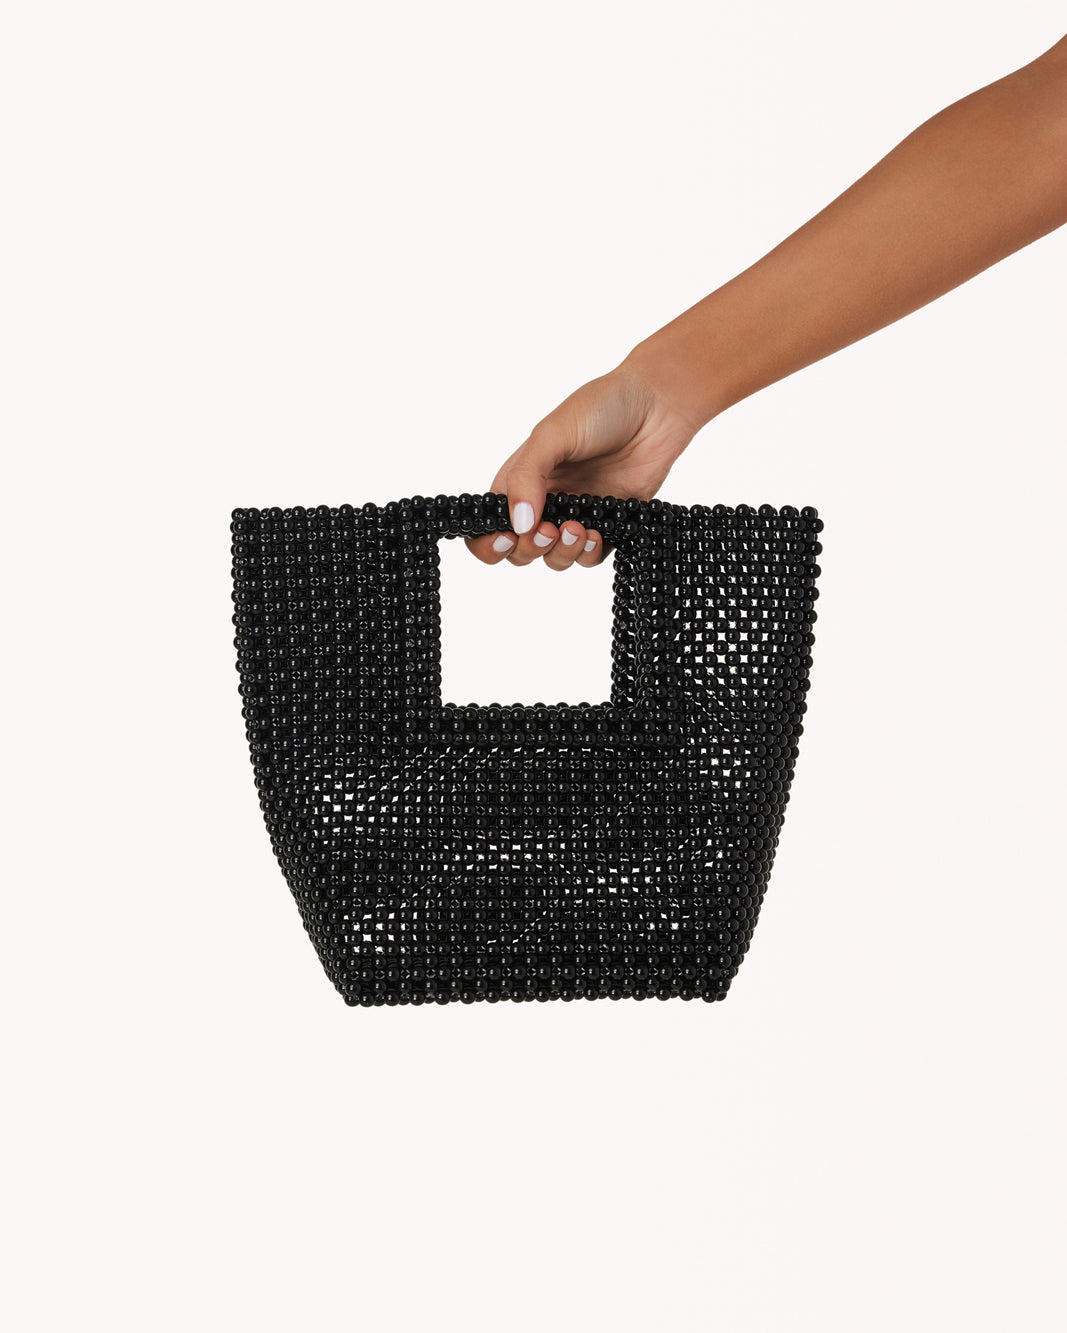 SAMARA HANDLE BAG - BLACK BEAD-Handbags-Billini-O/S-BILLINI USA